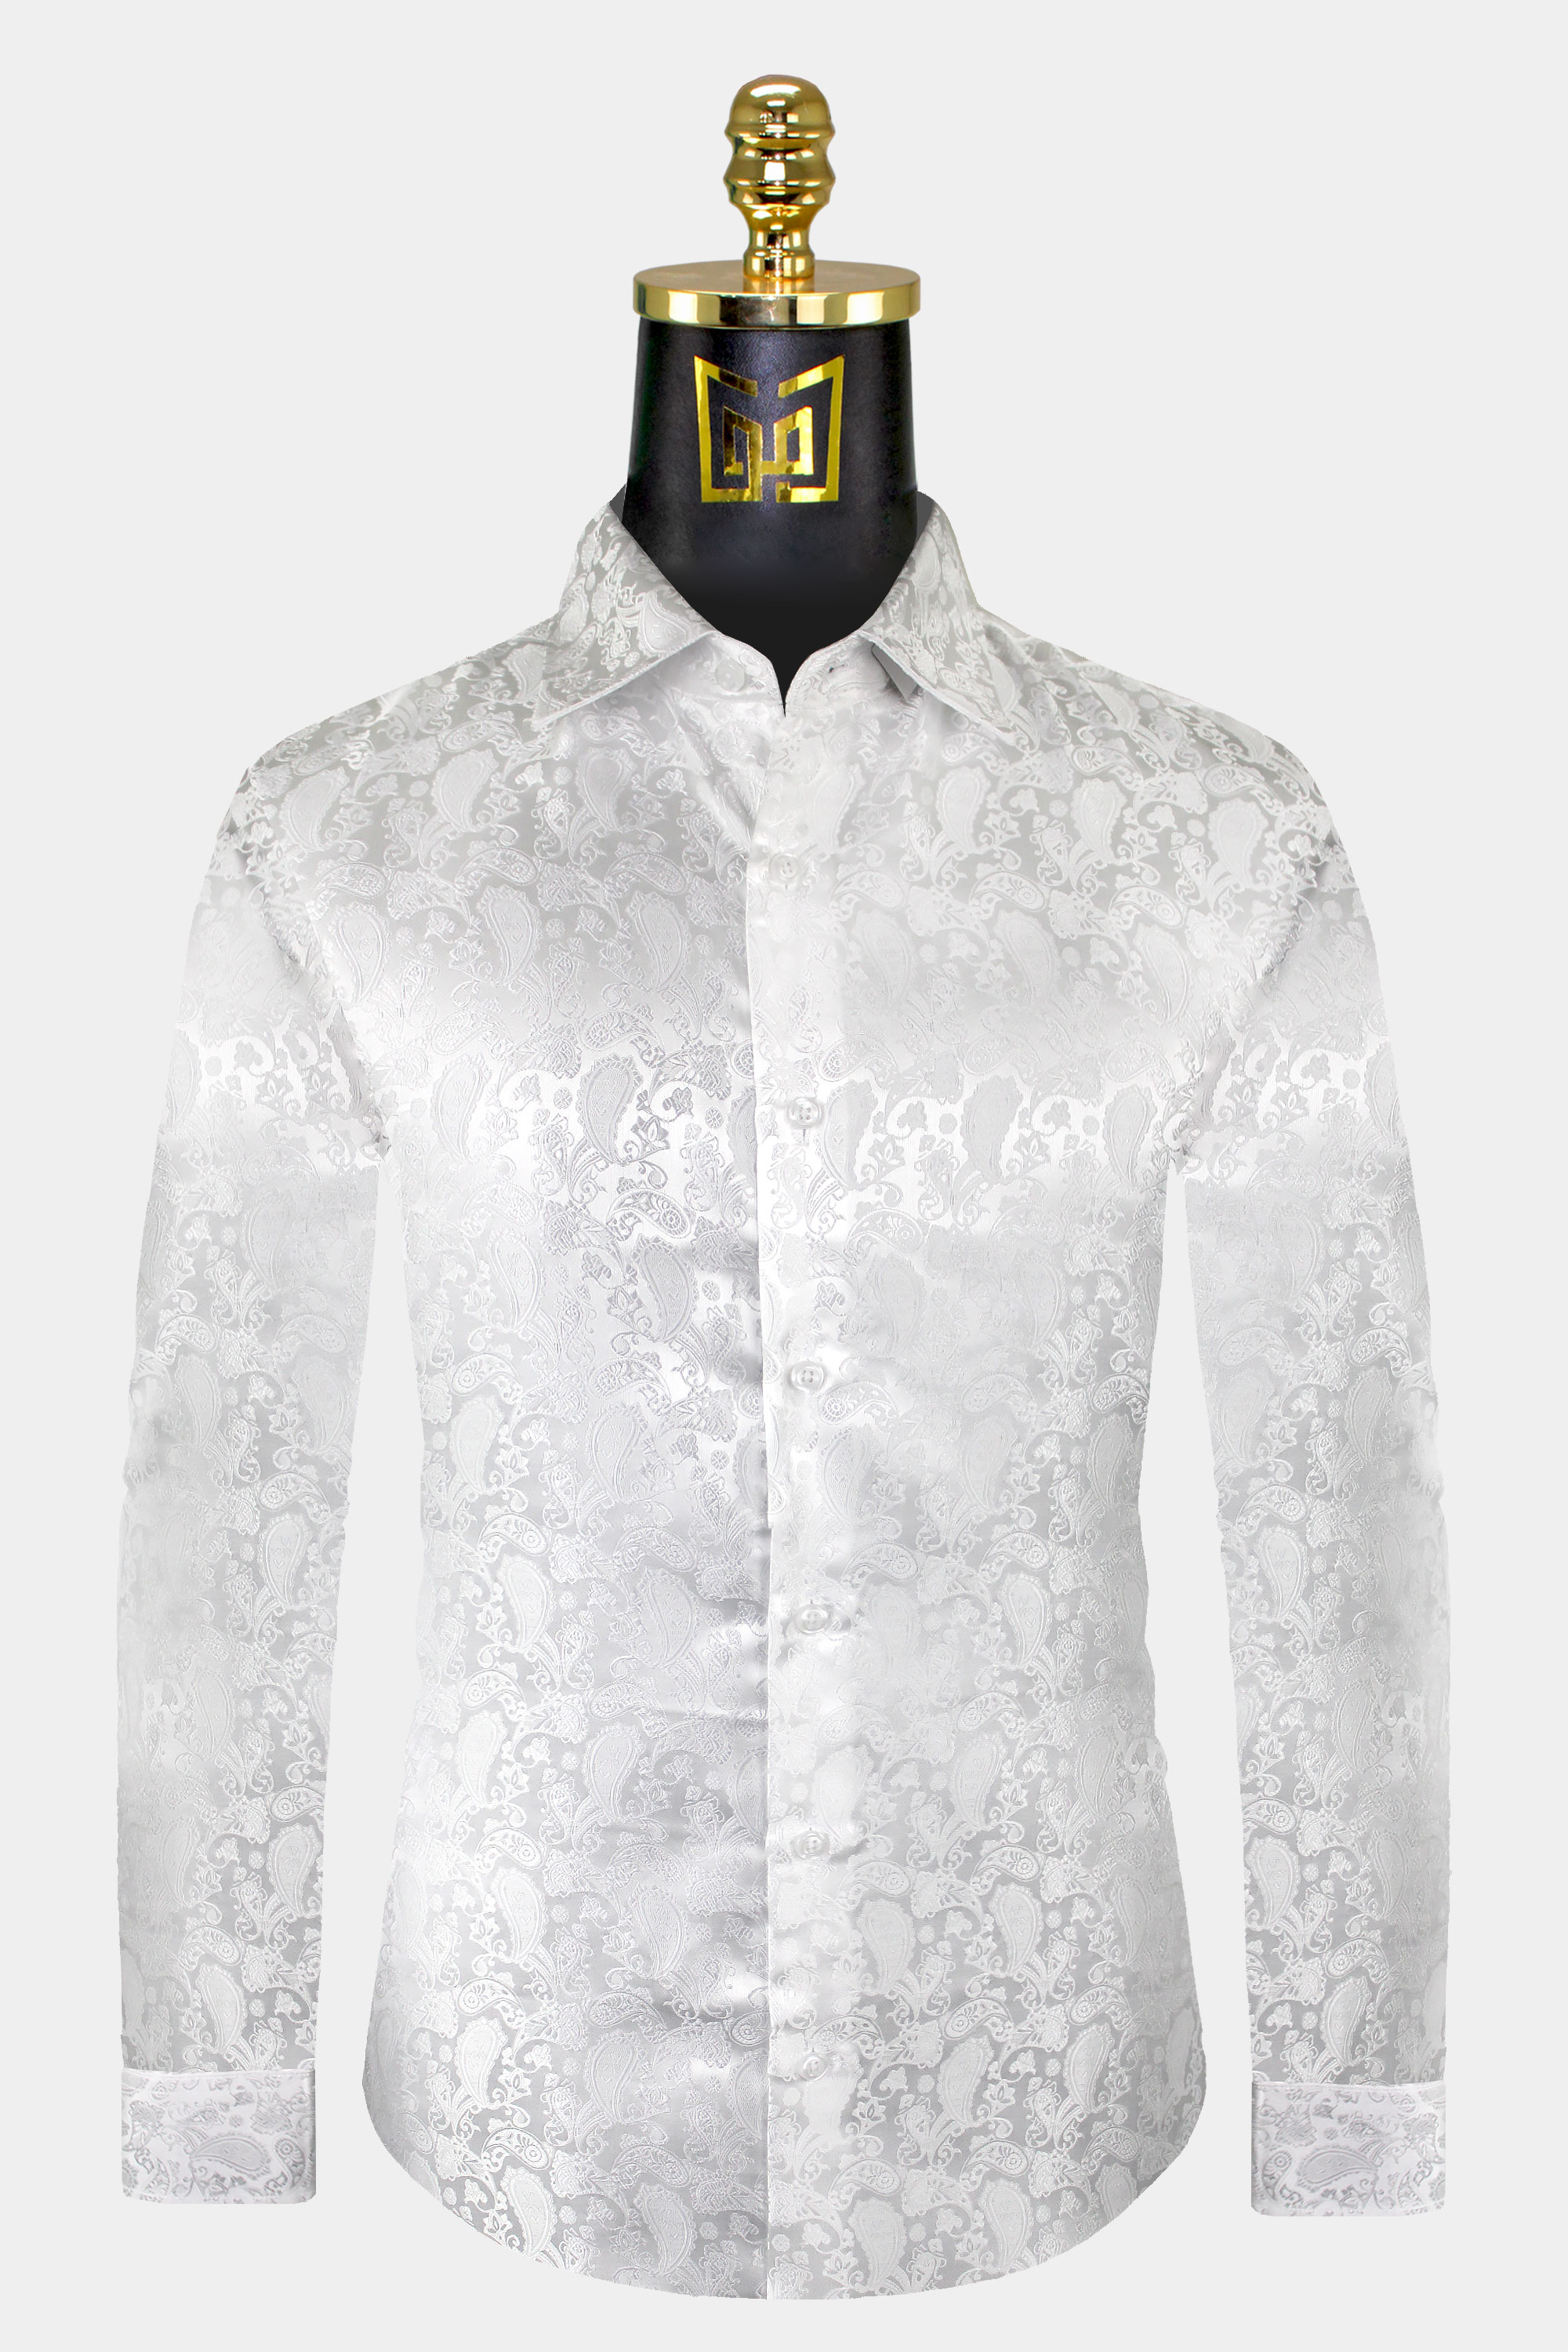 Mens-White-Paisley-Shirt-Floral-Dress-Shirt-For-Men-from-Gentlemansguru.com